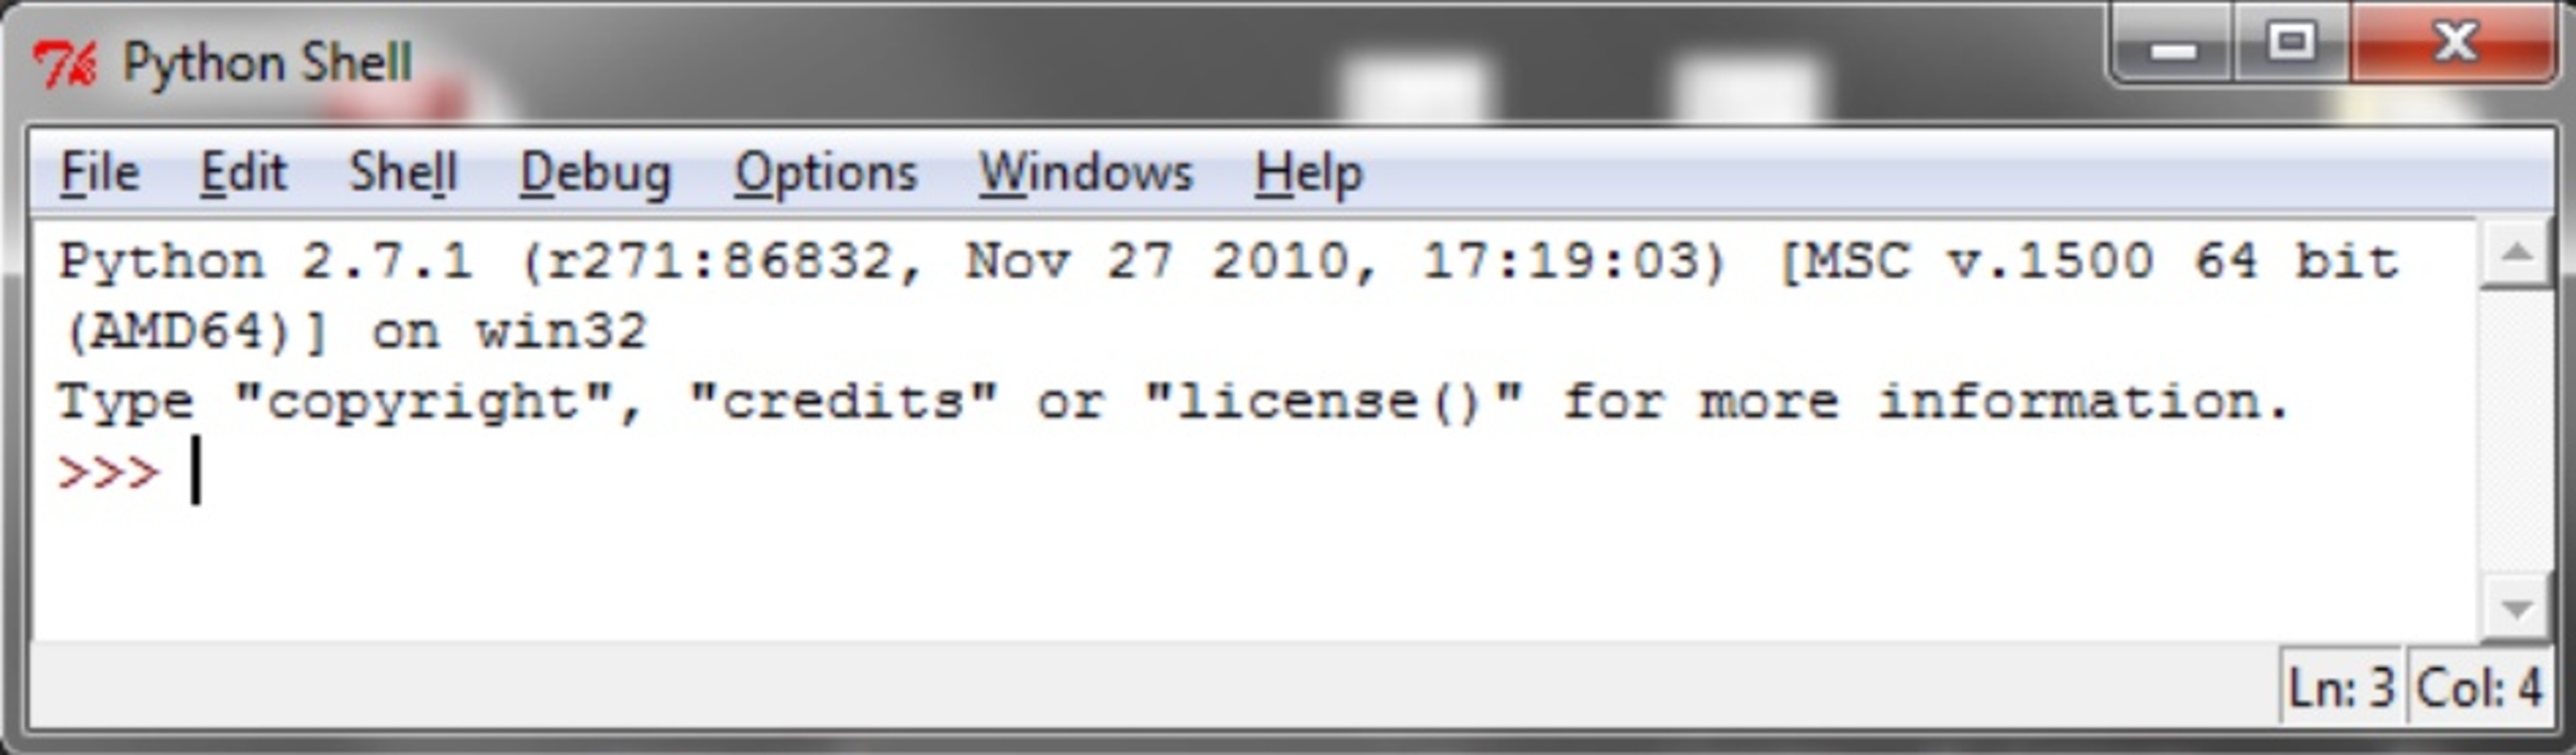 Python 3.12.2 for Windows Screenshot 1